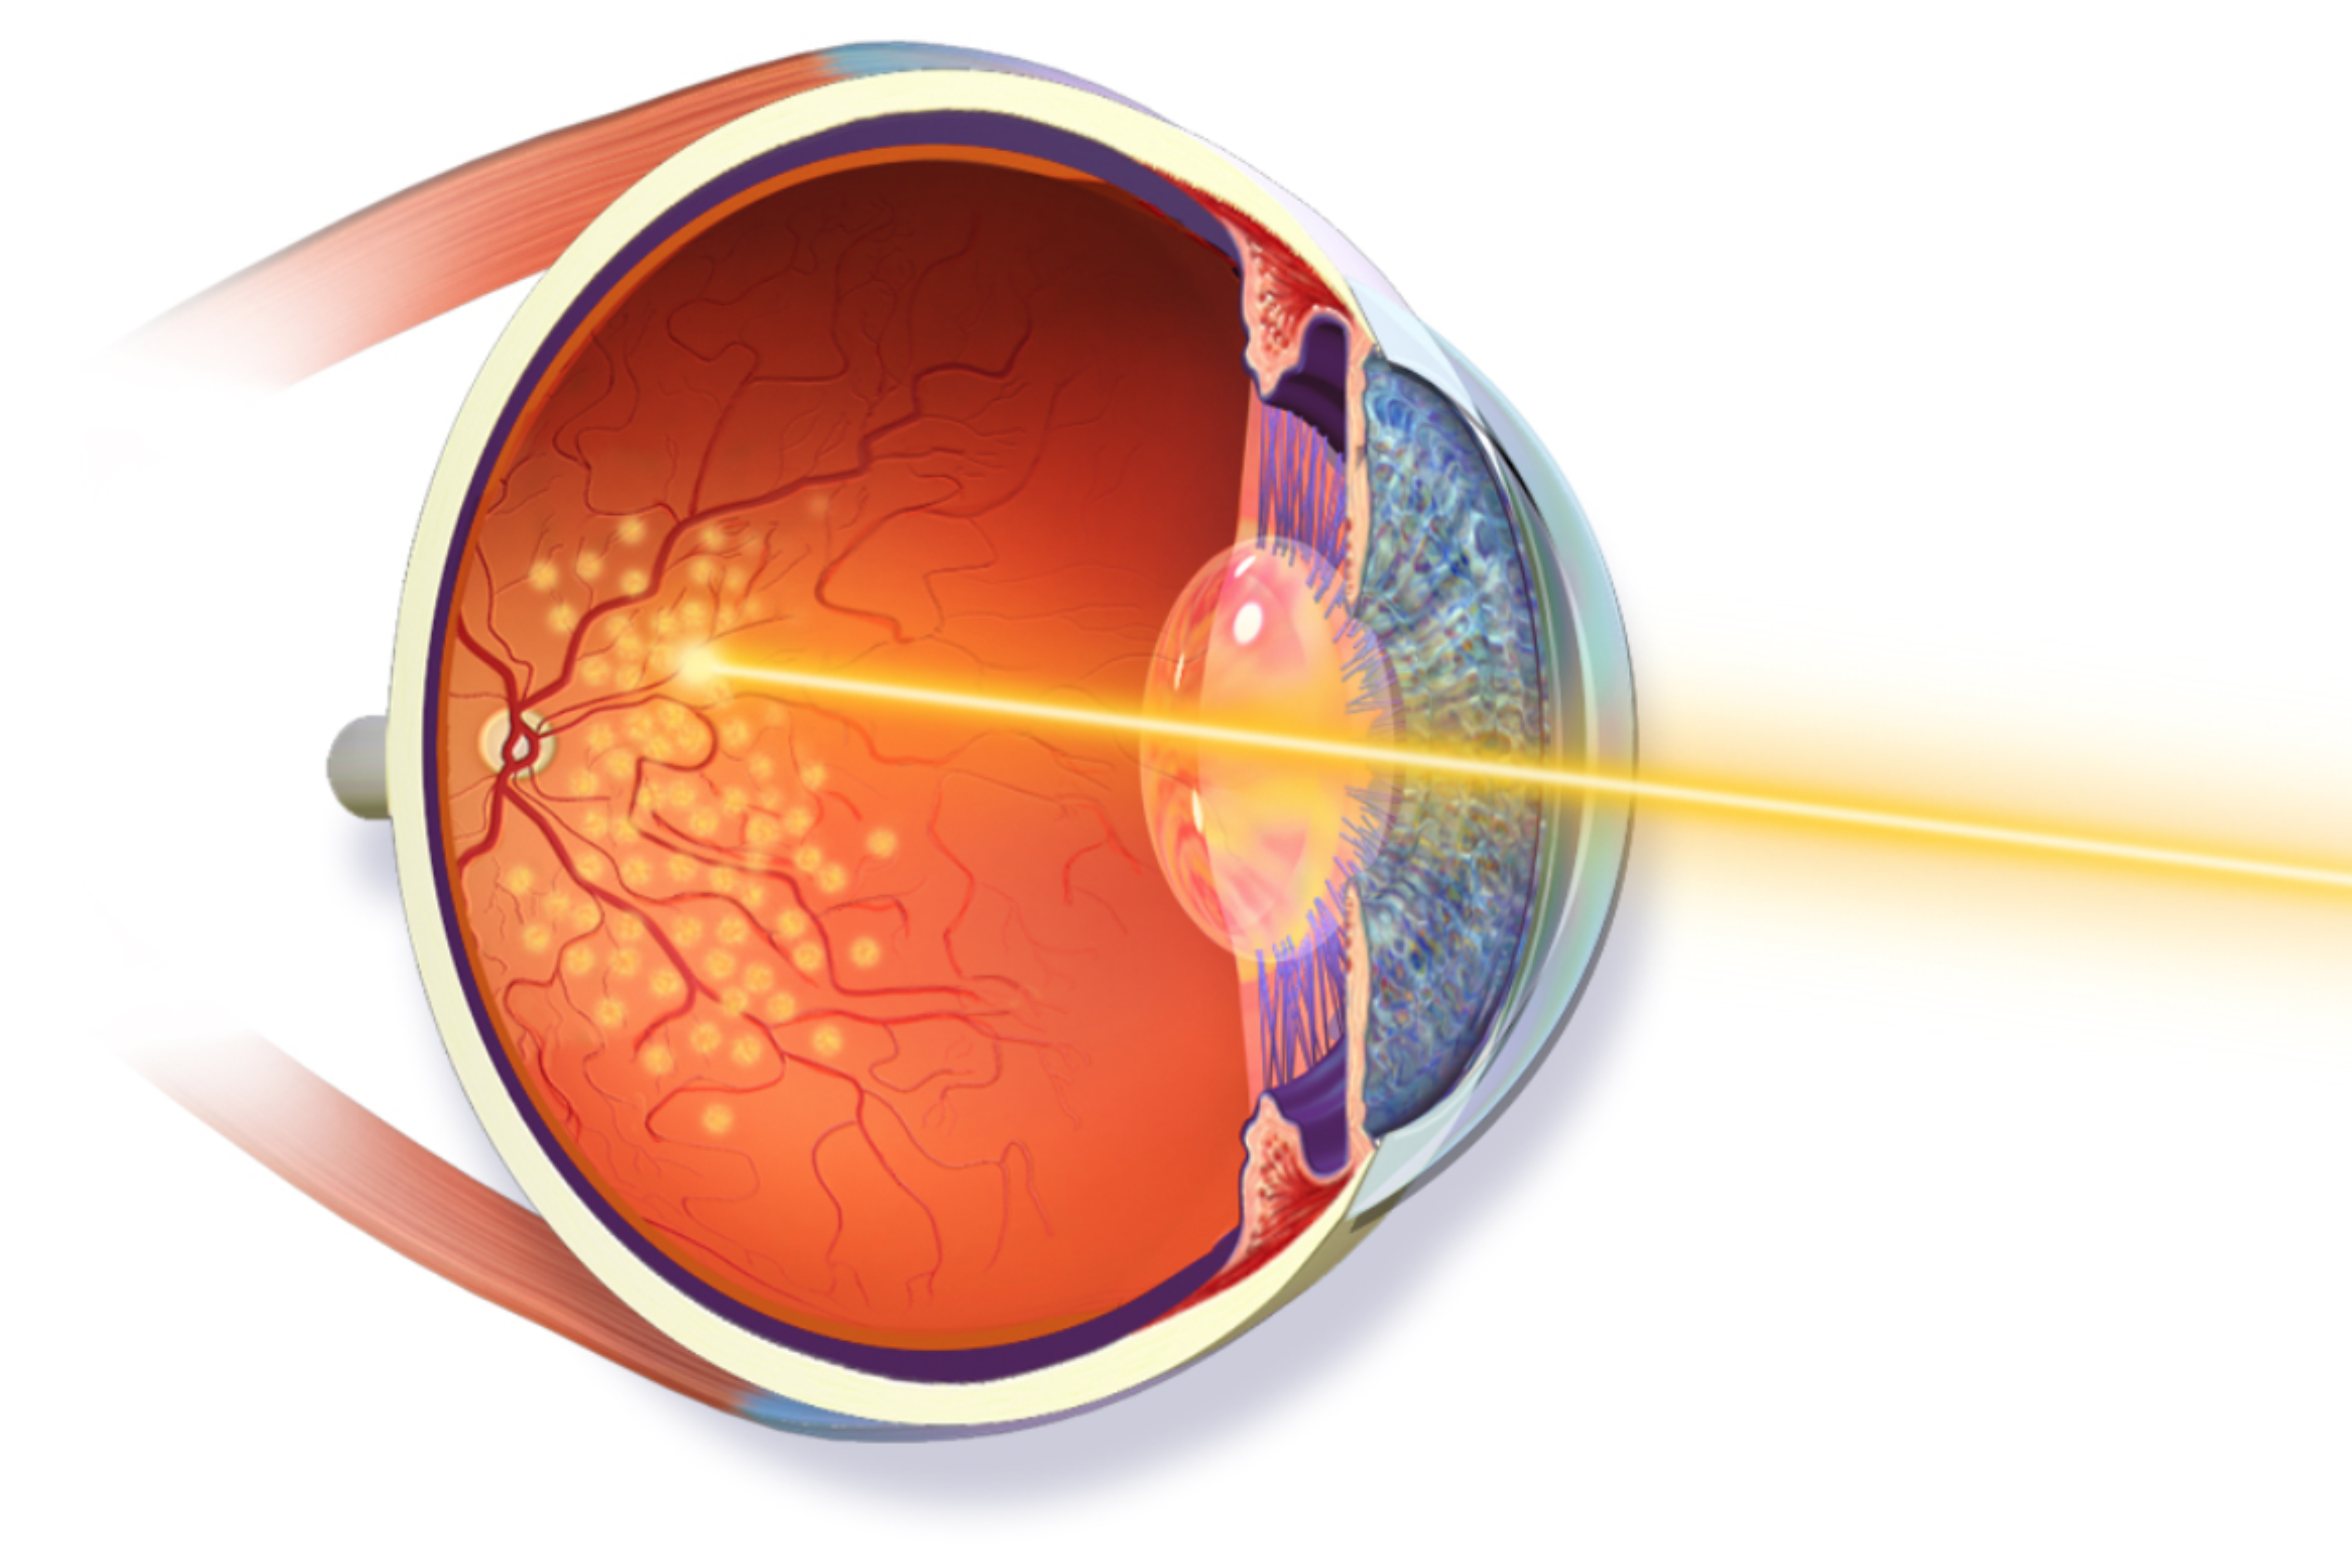 Retinal Surgery / Laser Treatment